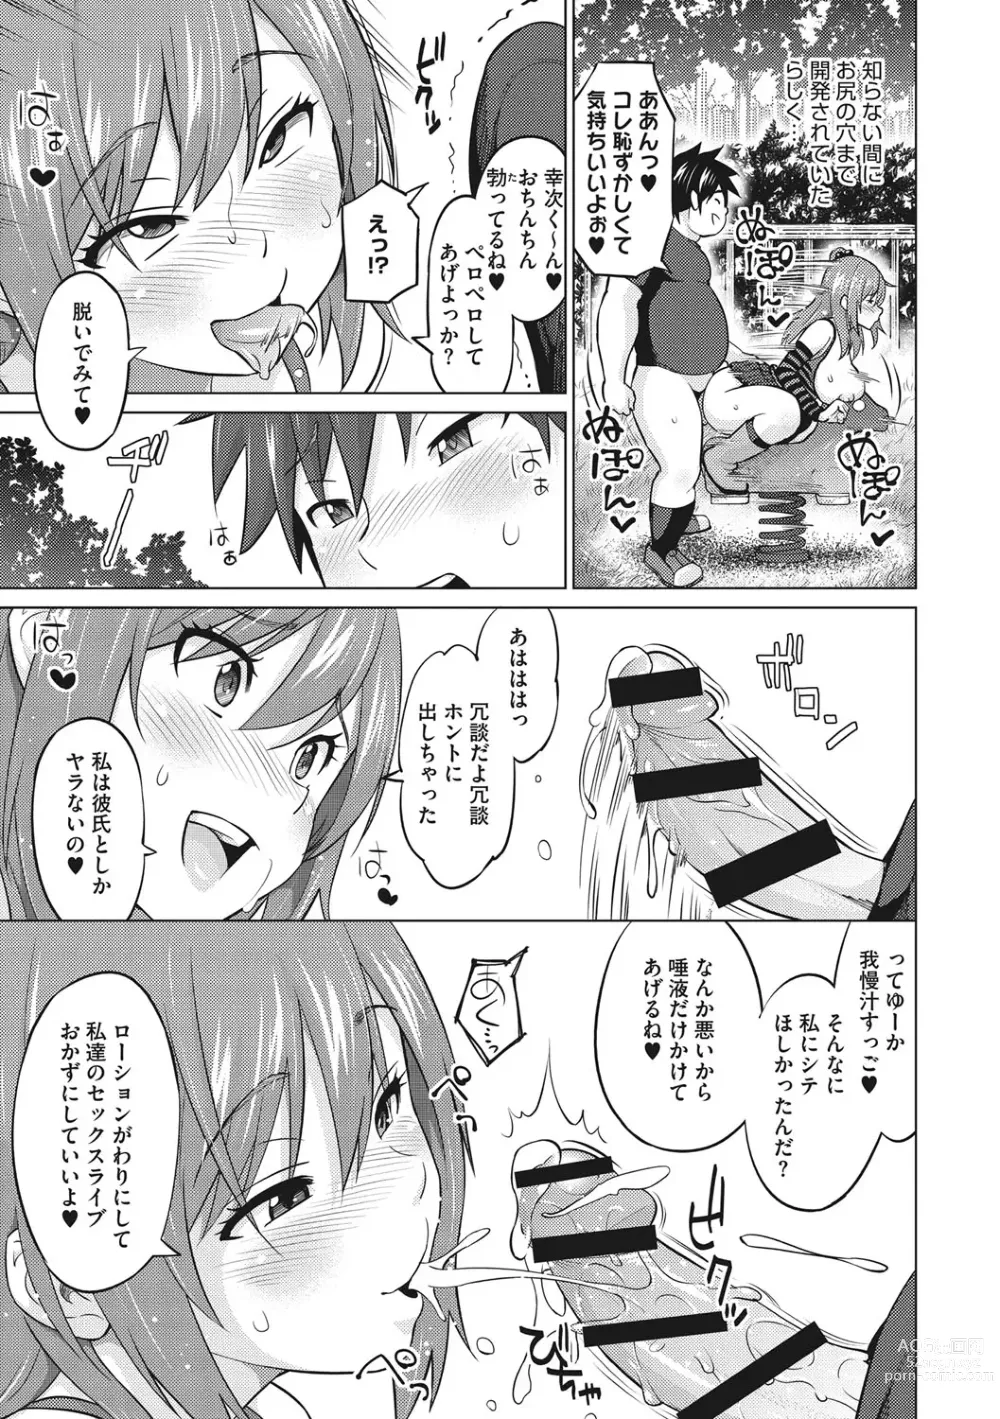 Page 268 of manga Netorare Onapet